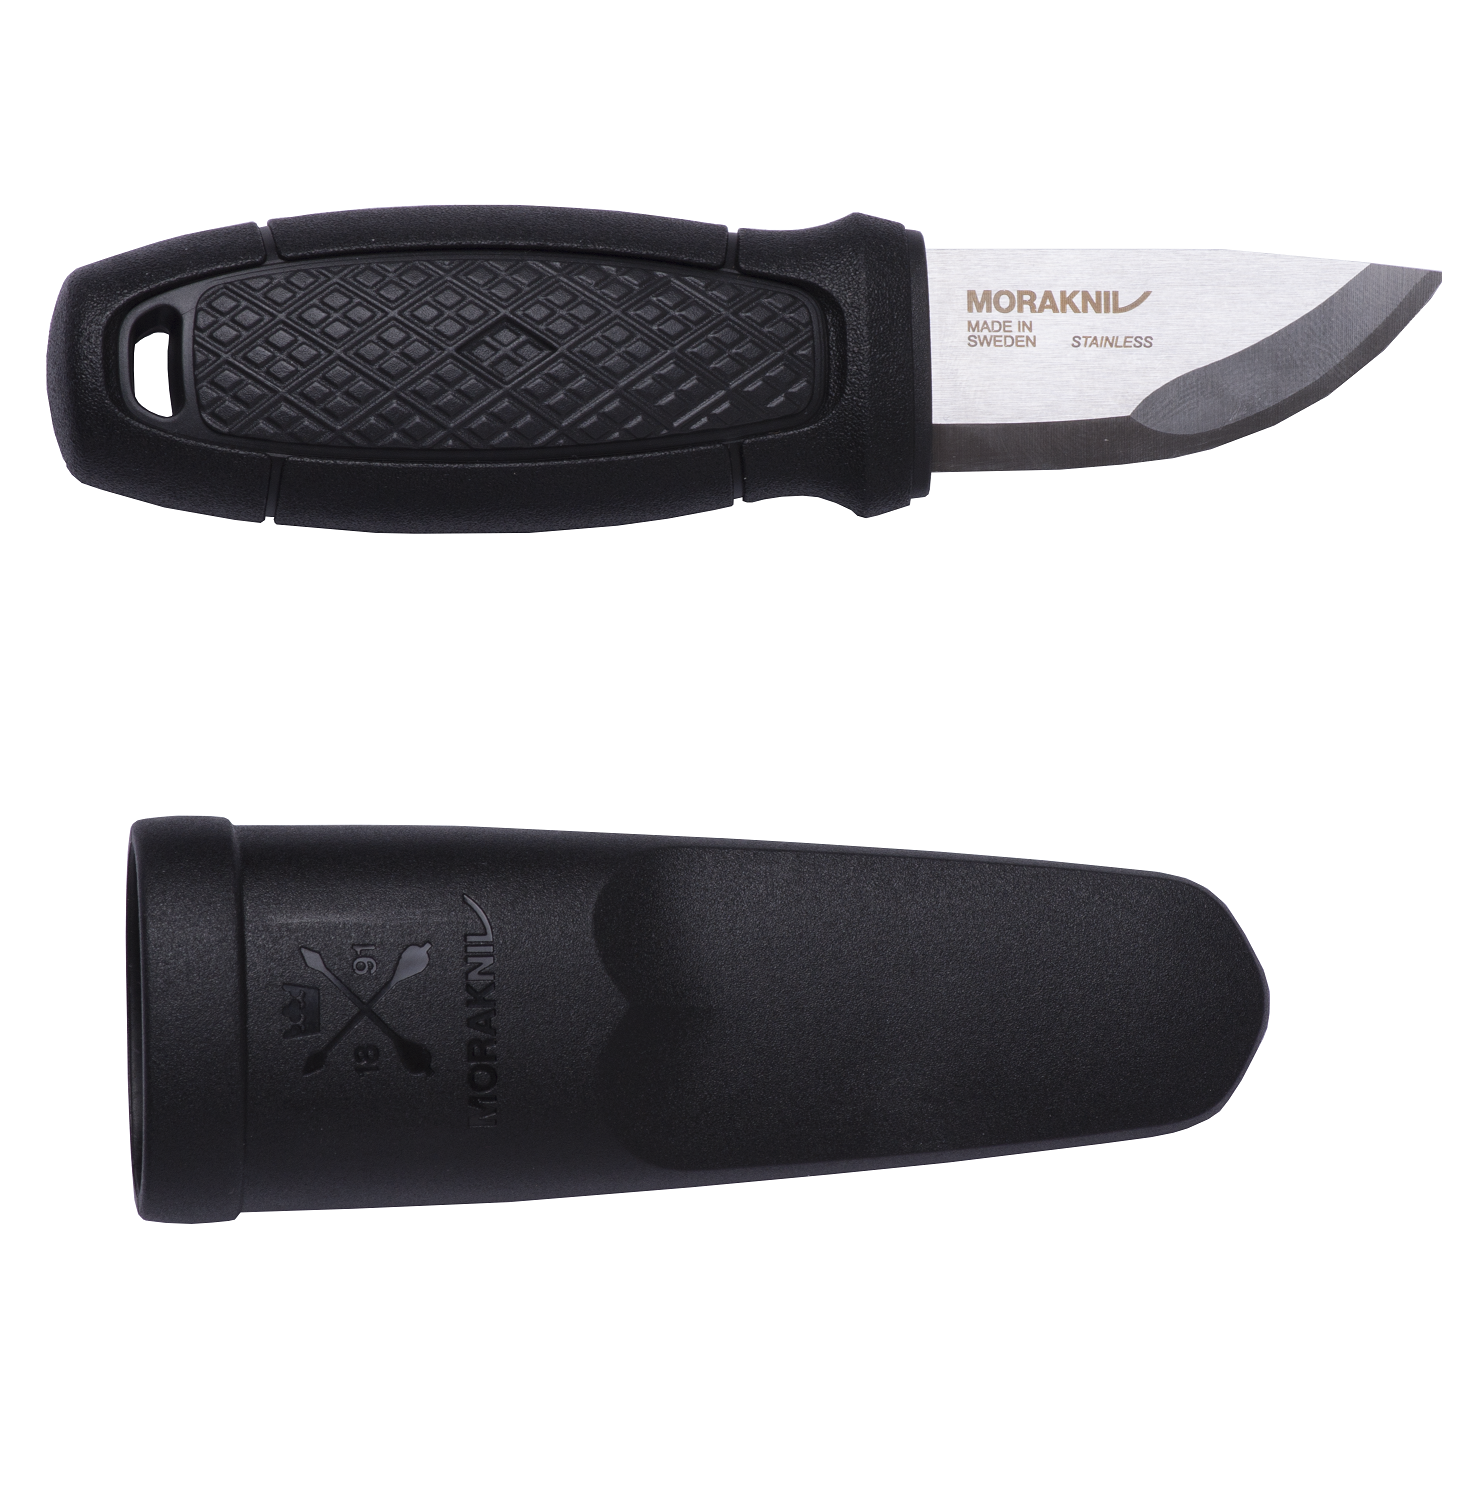 Purchase the Mora Knife Eldris Basis black by ASMC